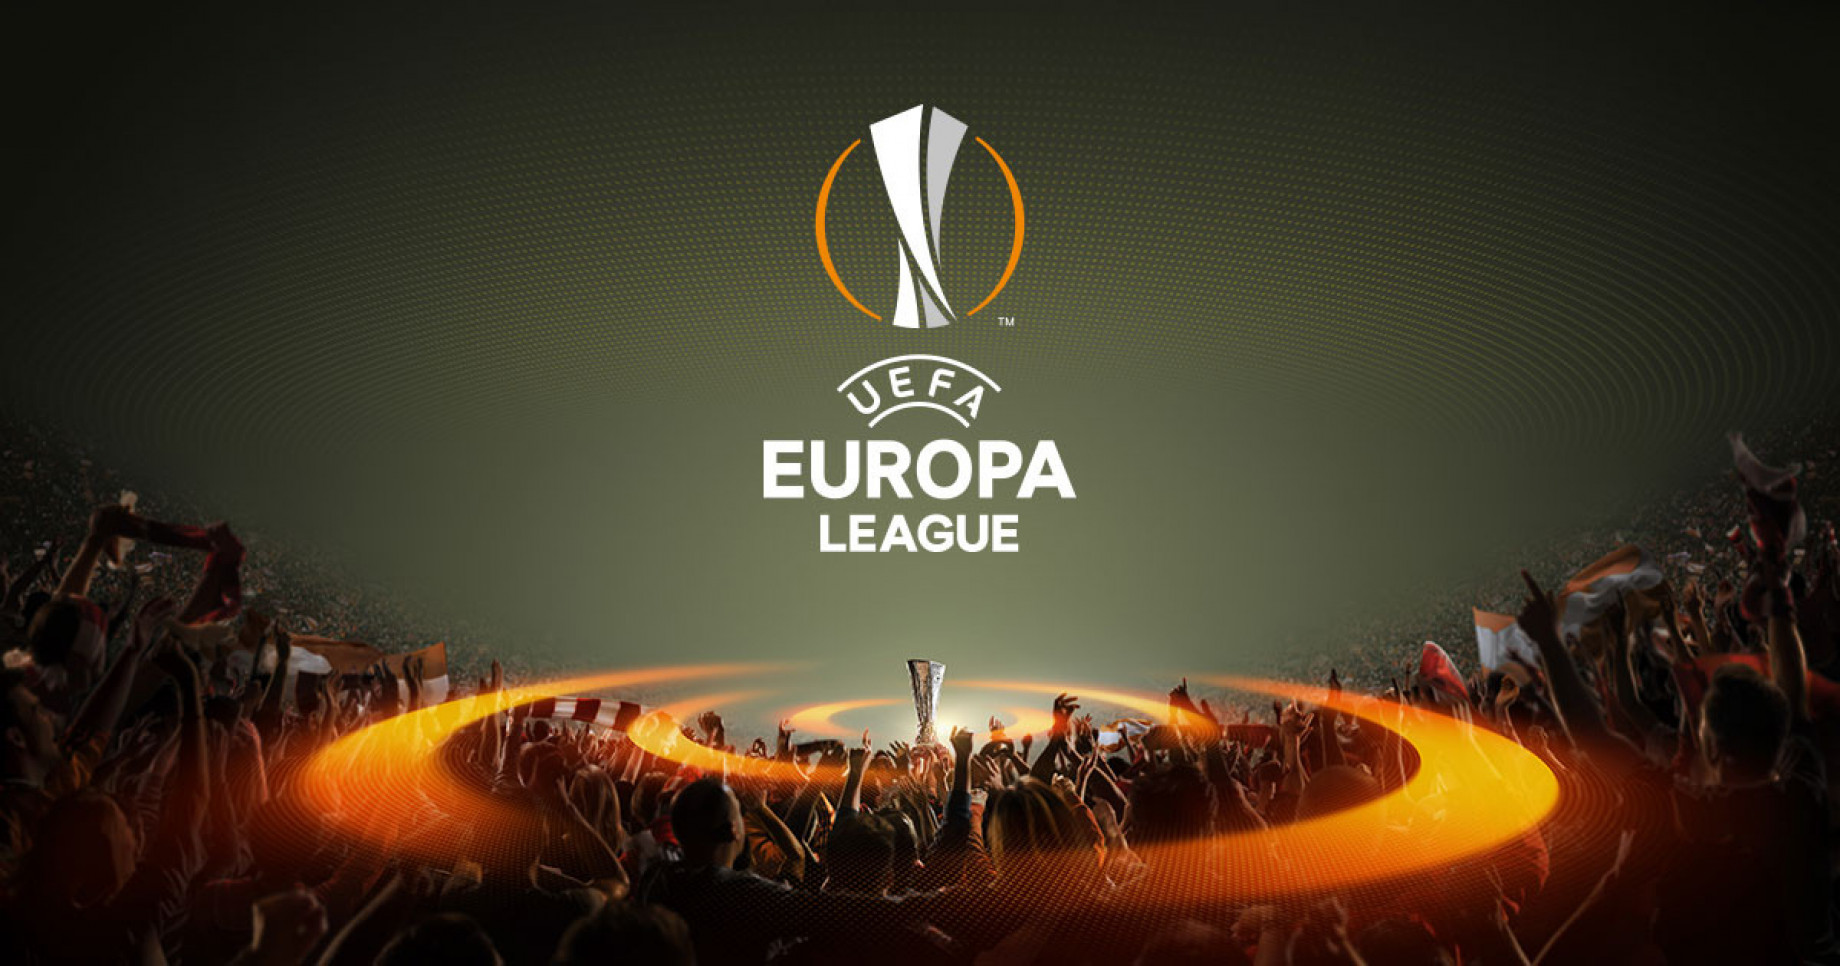 Europa League logo.jpg